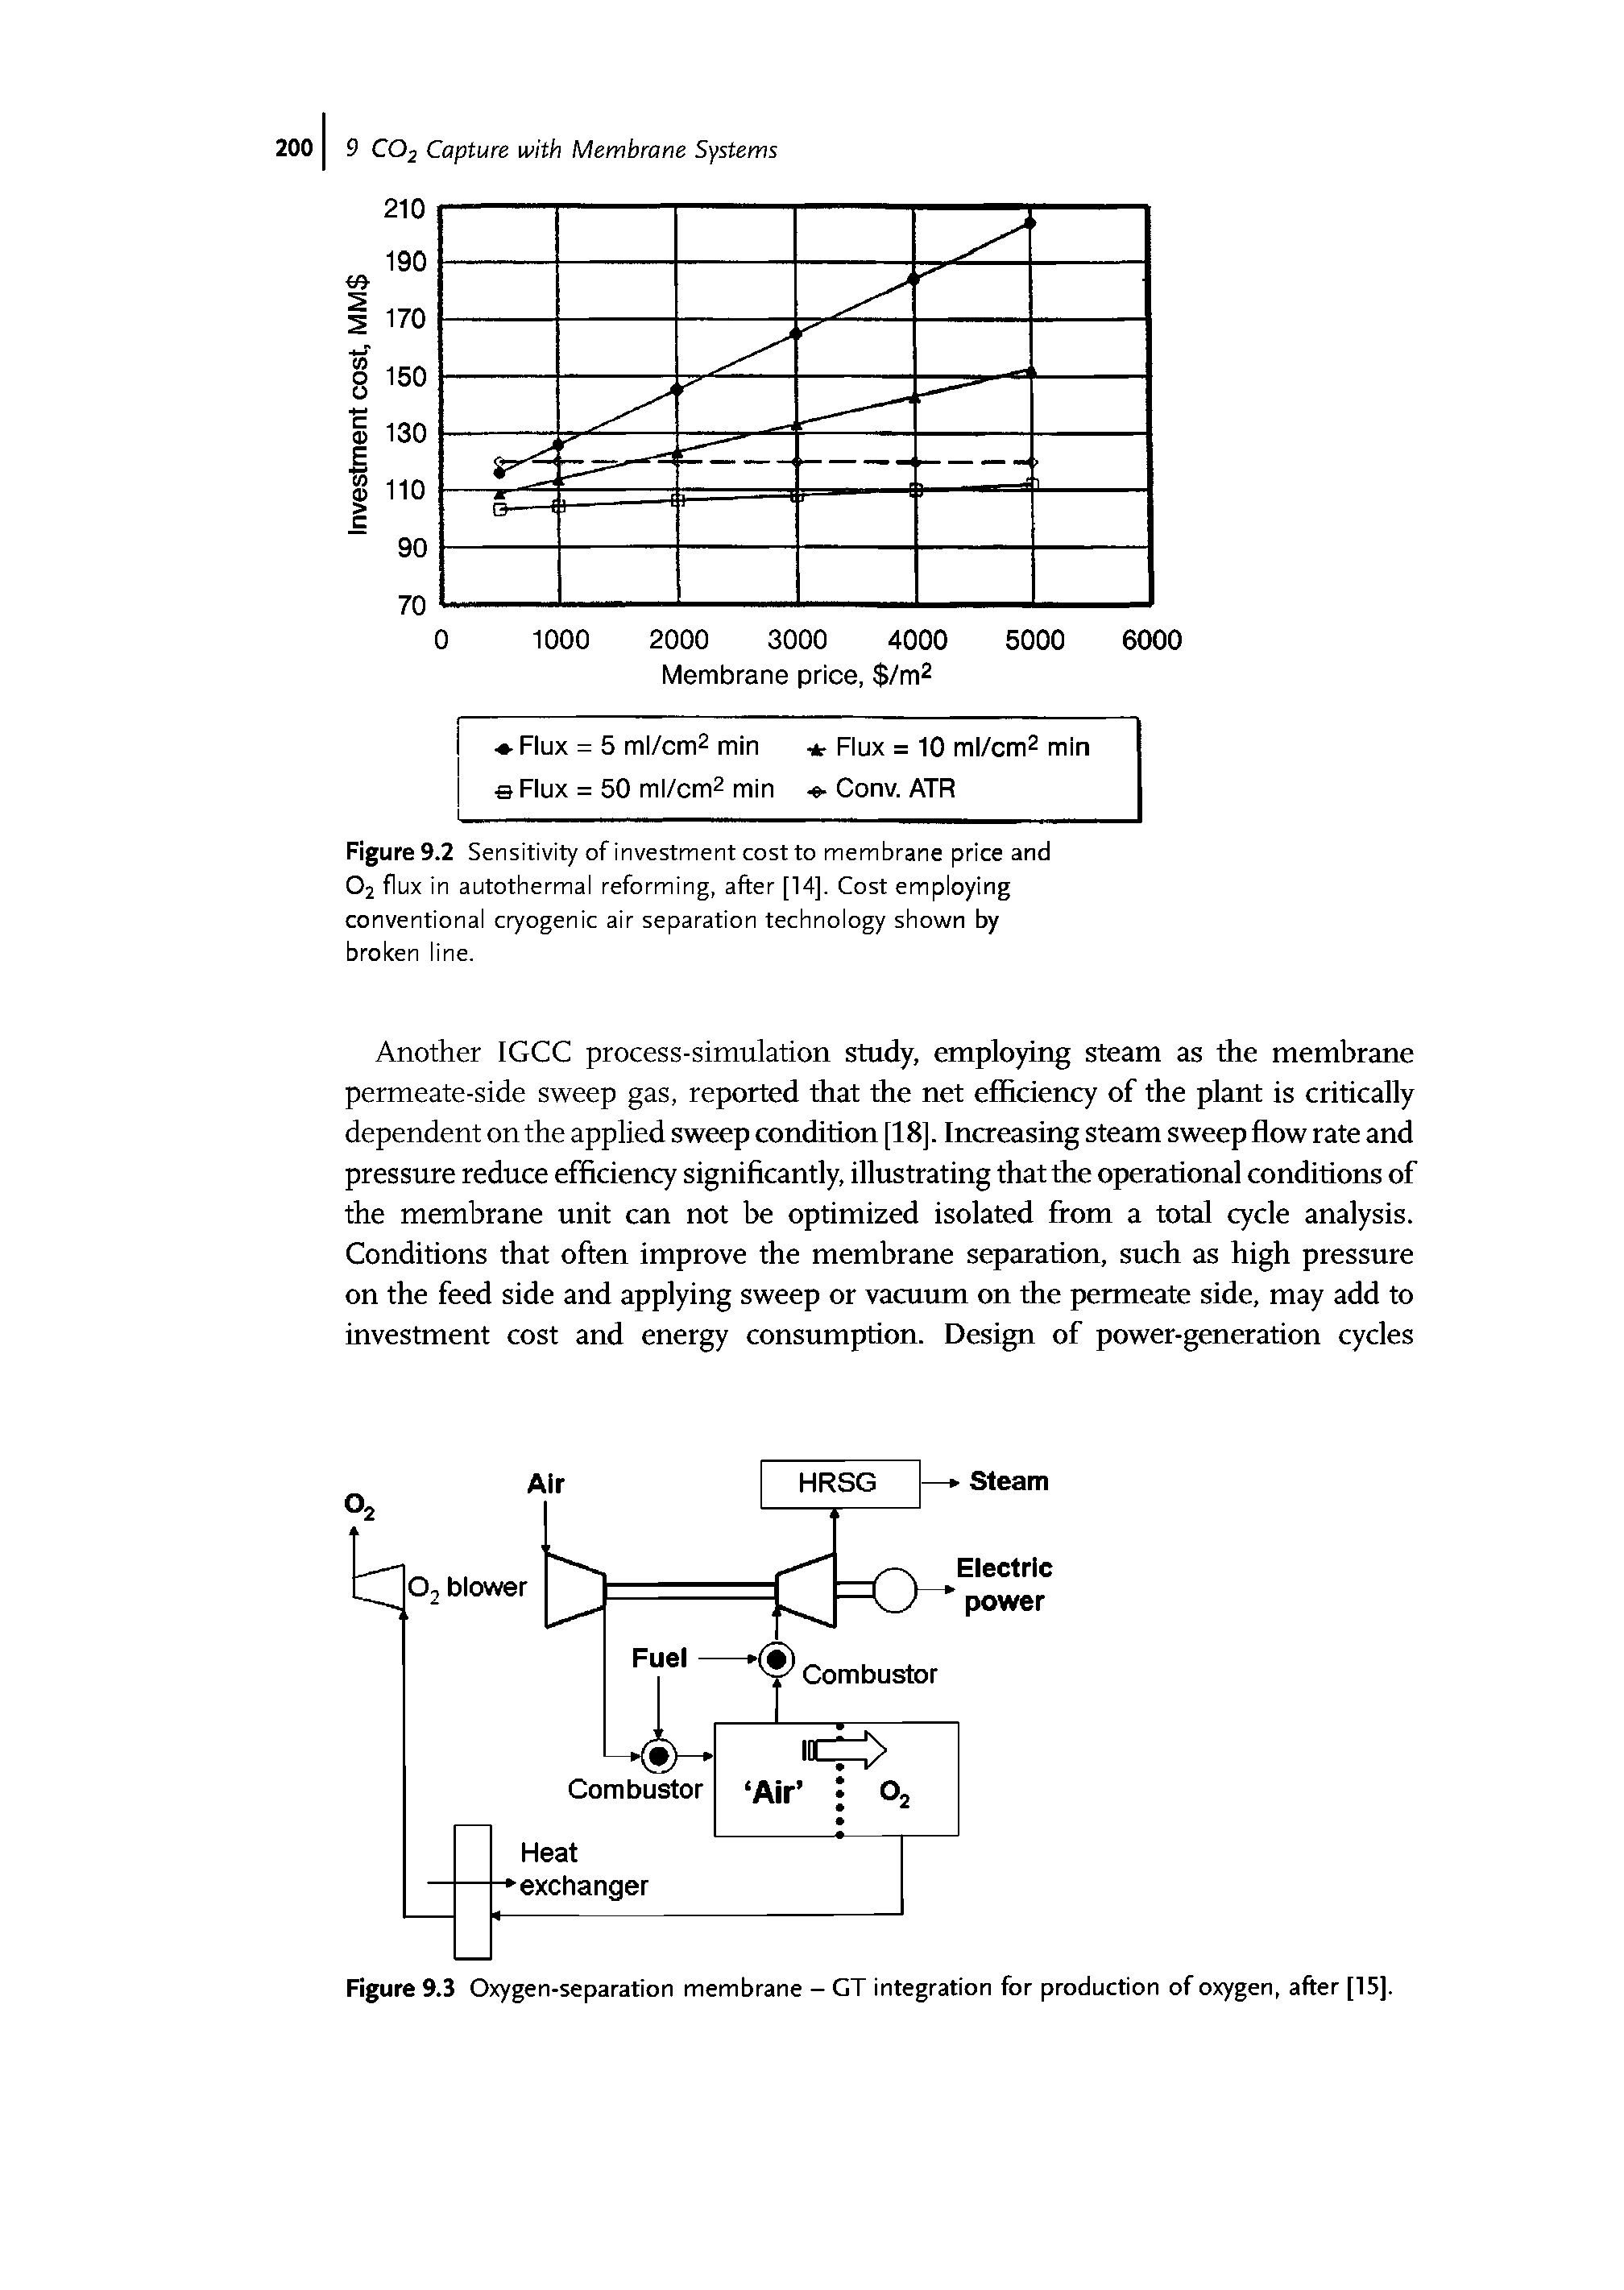 Figure 9.3 Oxygen-separation membrane - GT integration for production of oxygen, after [15].